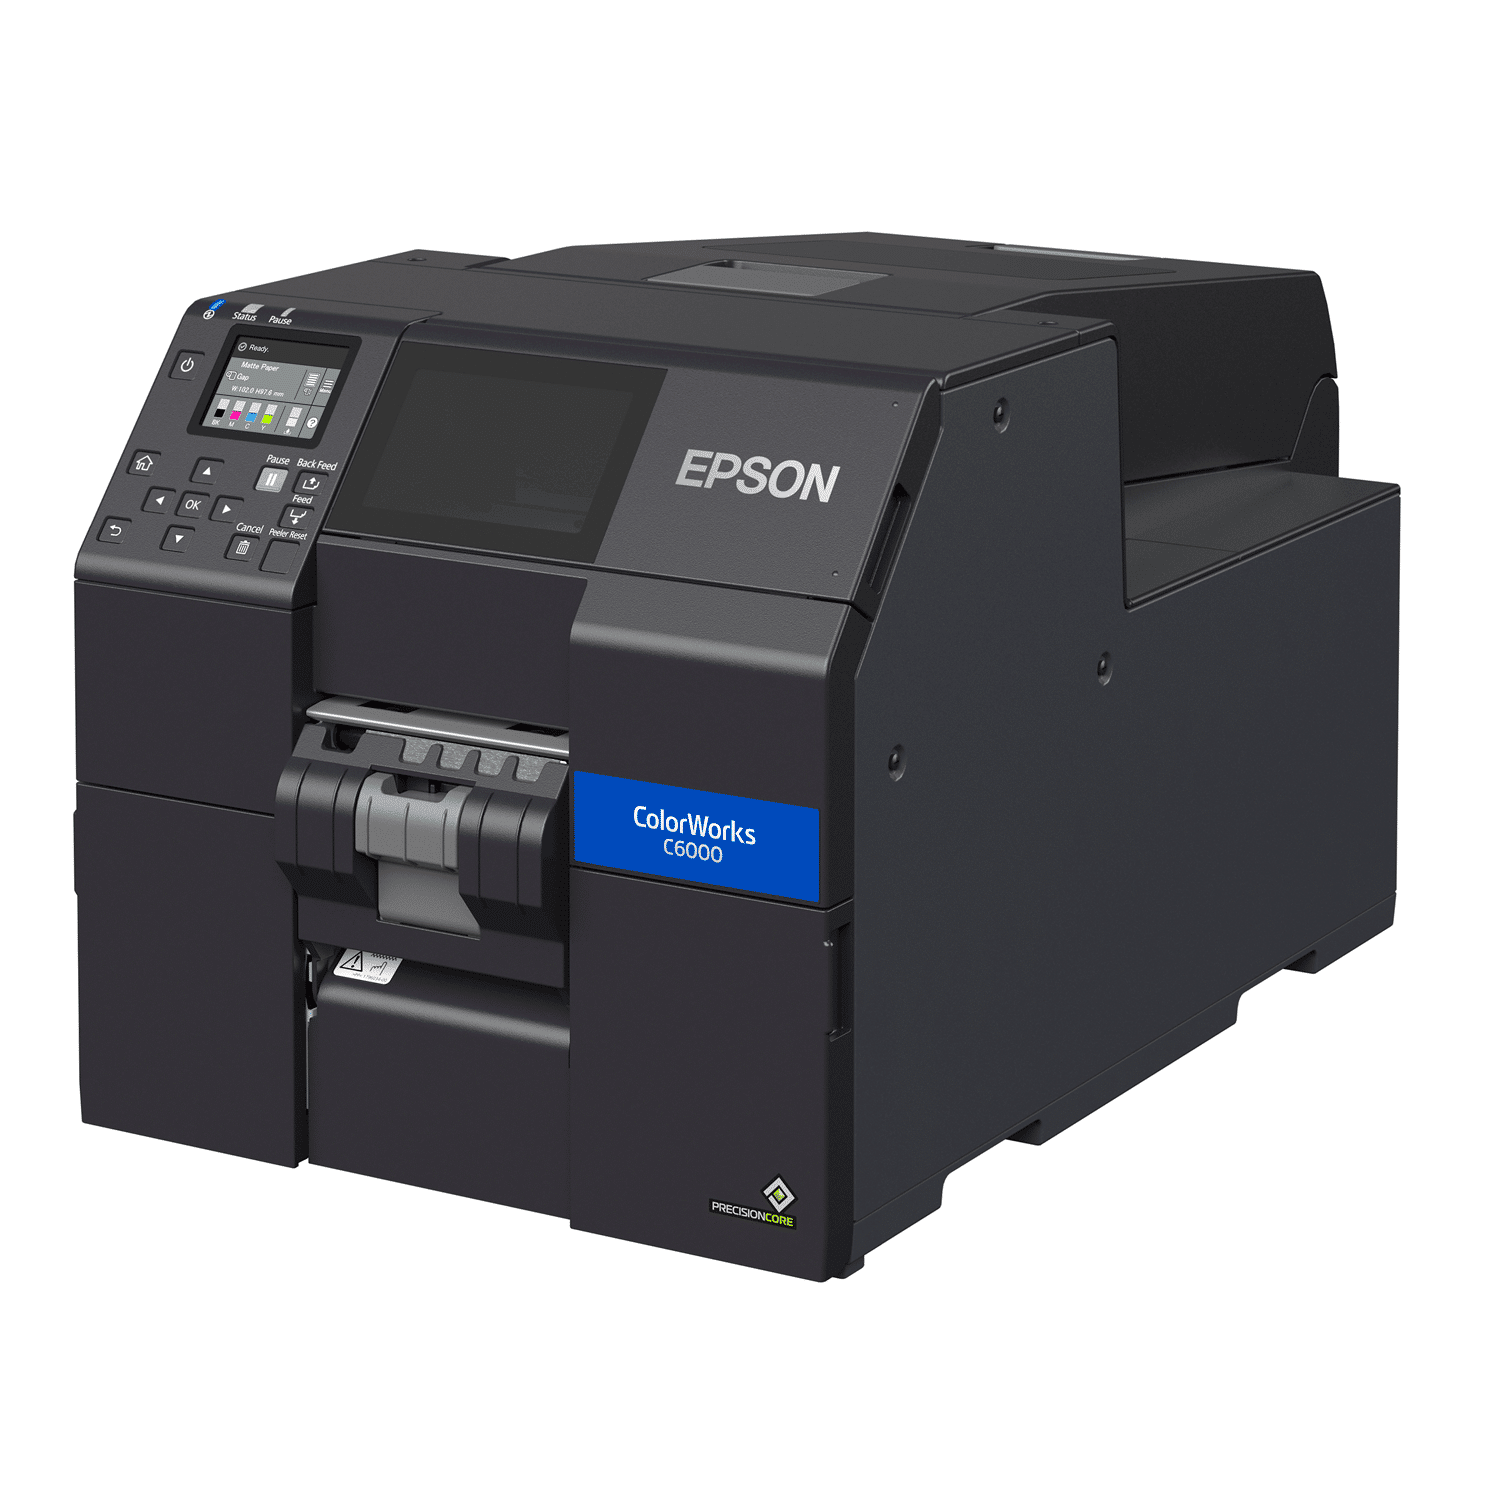 epson c6000p-lg printer